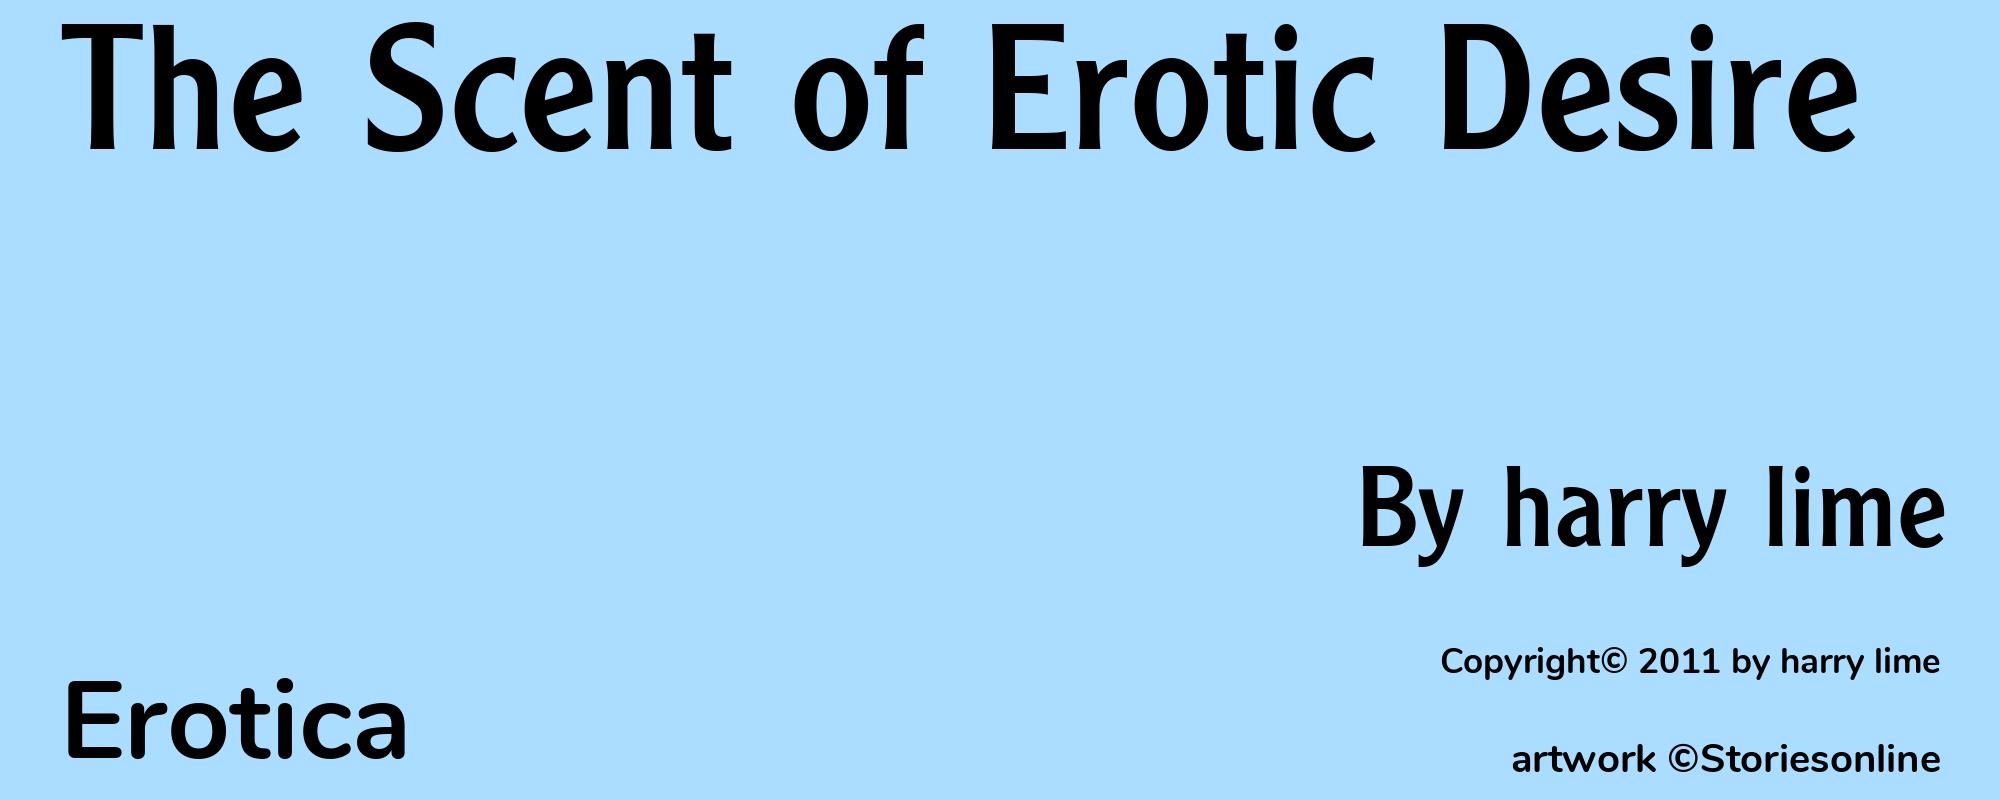 The Scent of Erotic Desire - Cover